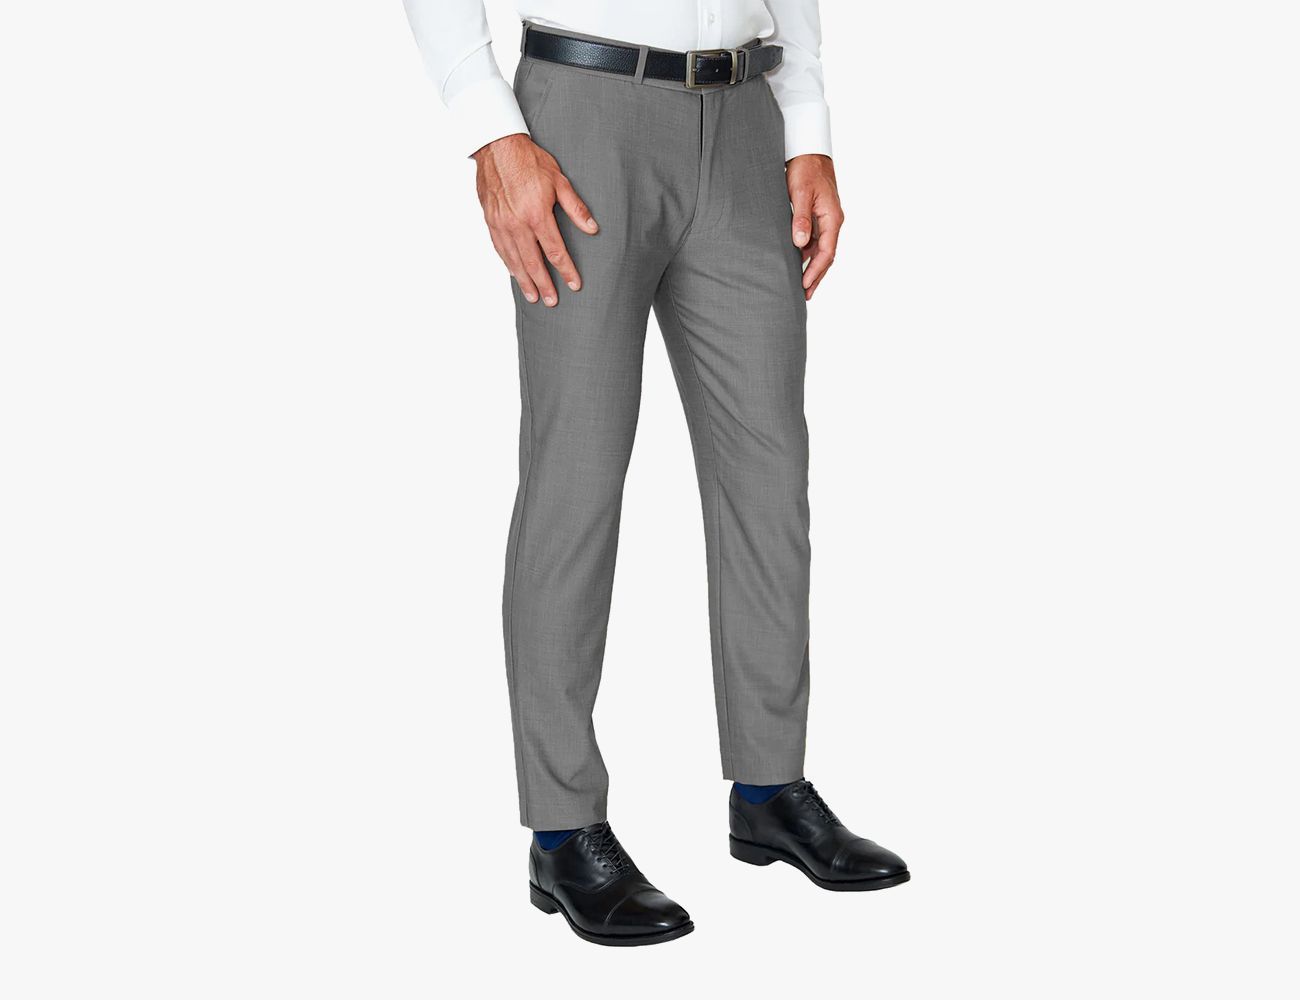 Plaid&Plain Men's Dress Pants Slim Fit Stretch 603 Navy Blue(New) 29X30 :  Buy Online at Best Price in KSA - Souq is now Amazon.sa: Fashion